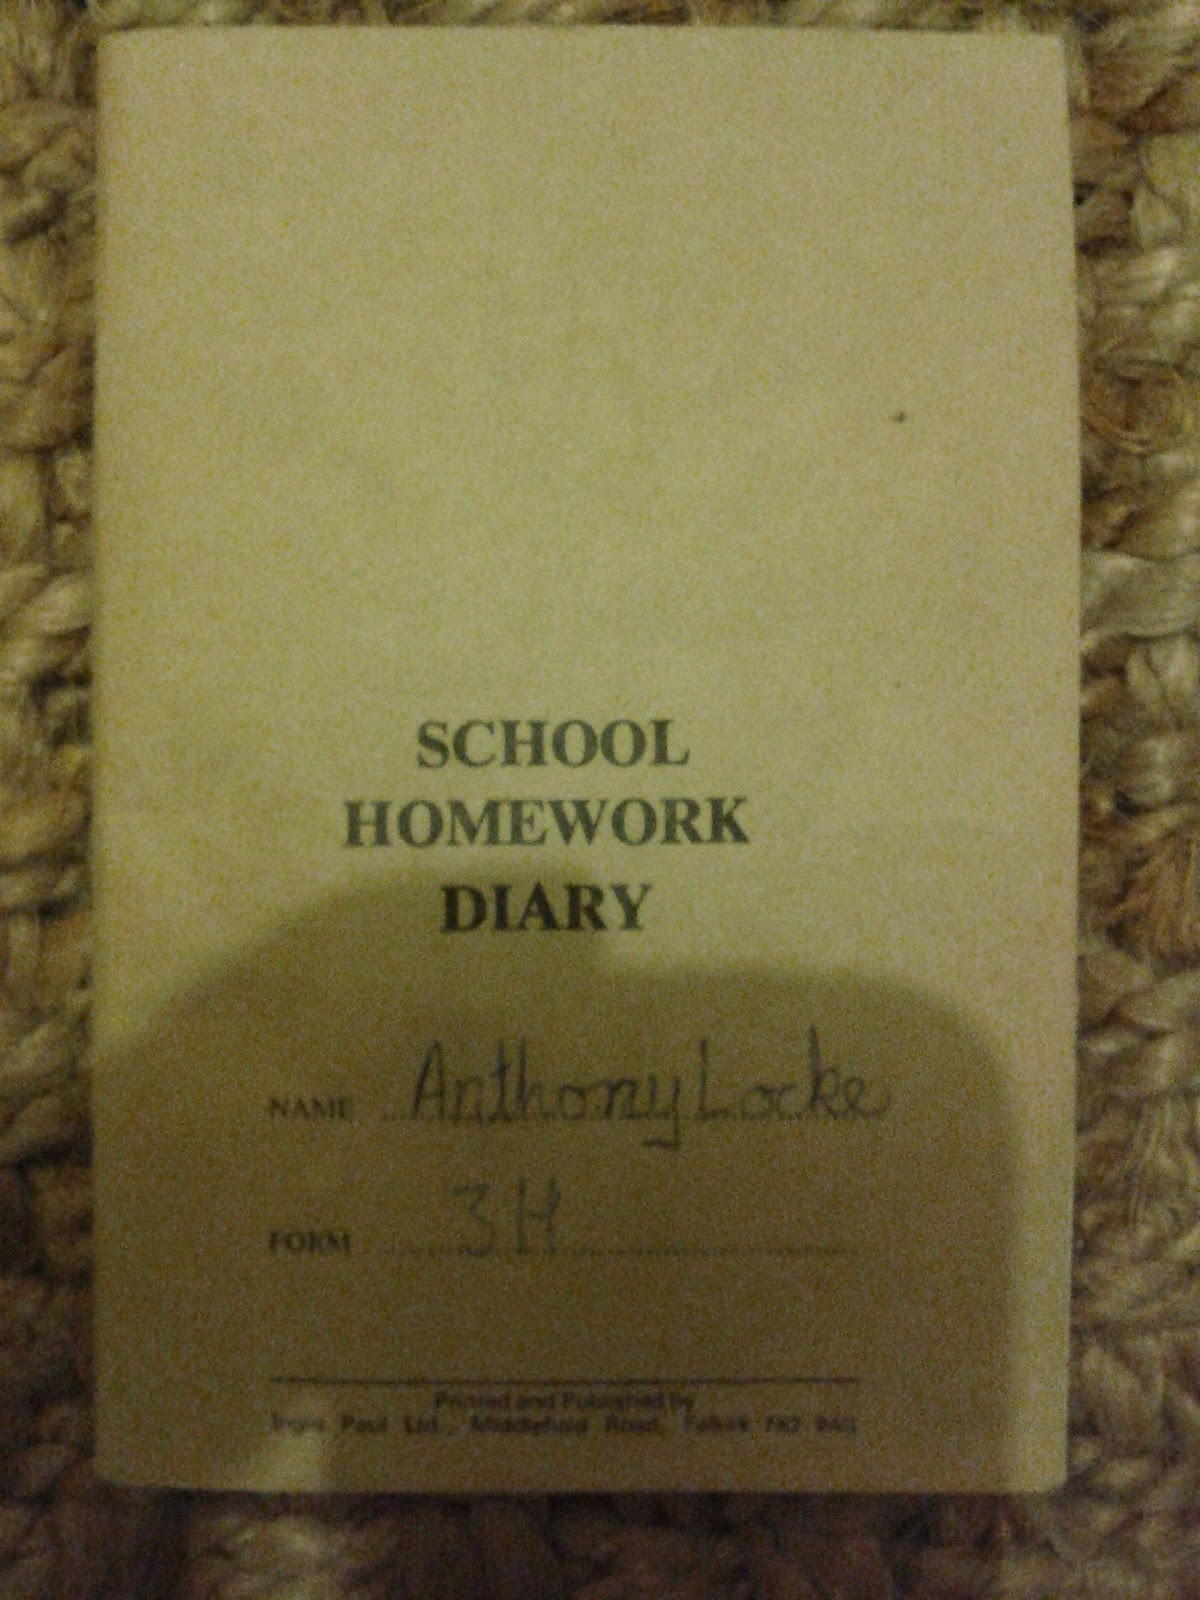 Homework Diary